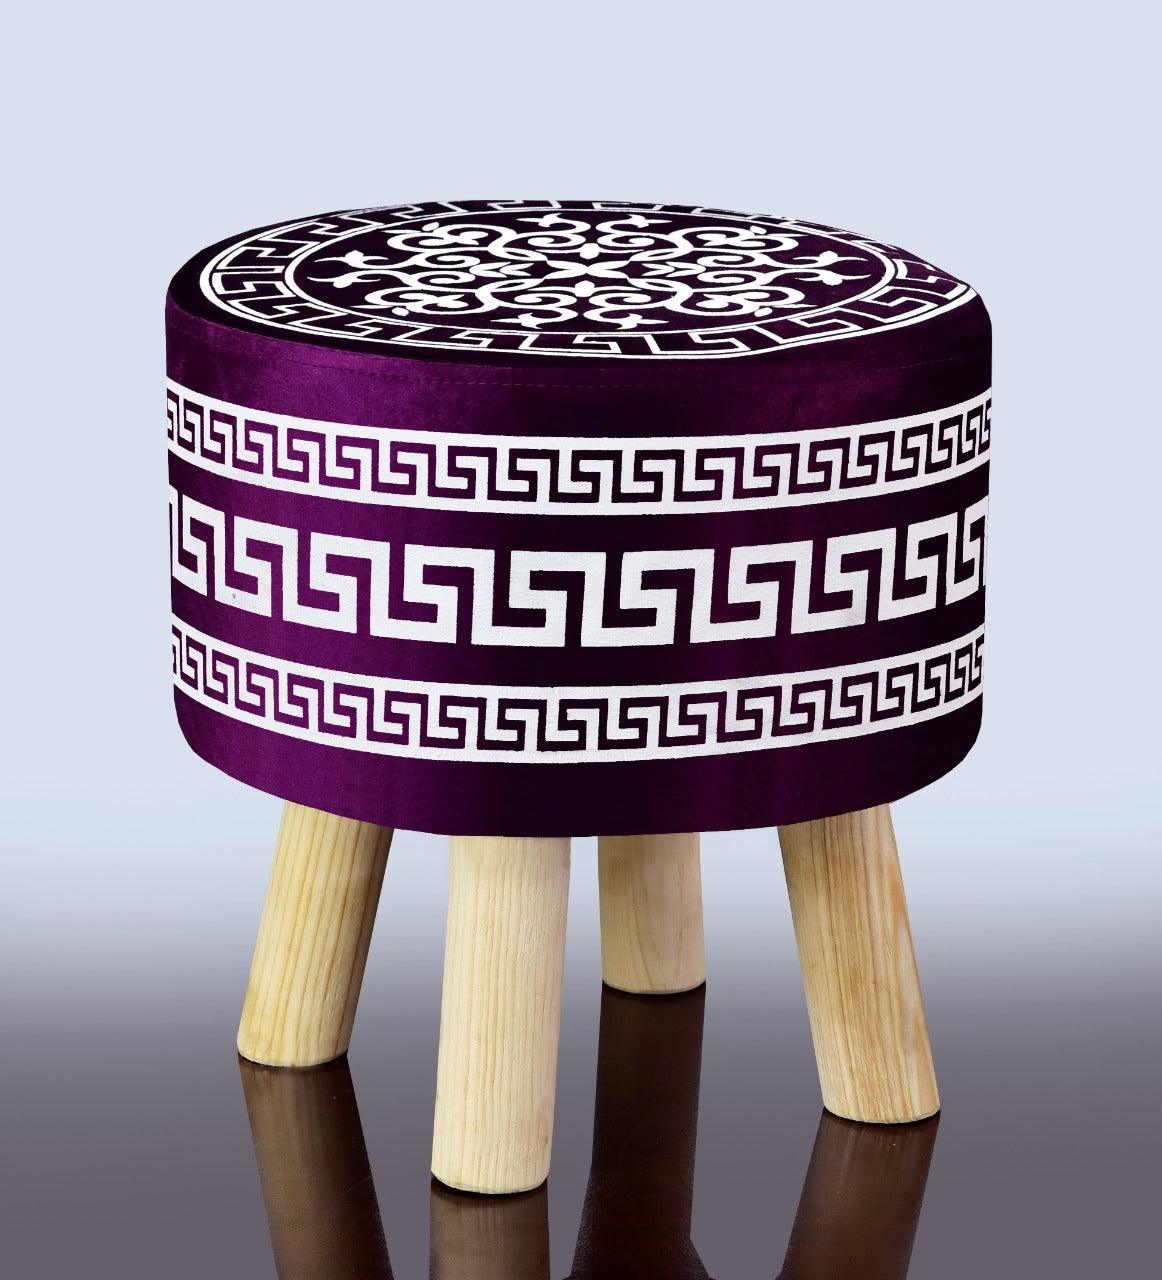 Wooden stool Vercase Design round shape-743 - 92Bedding